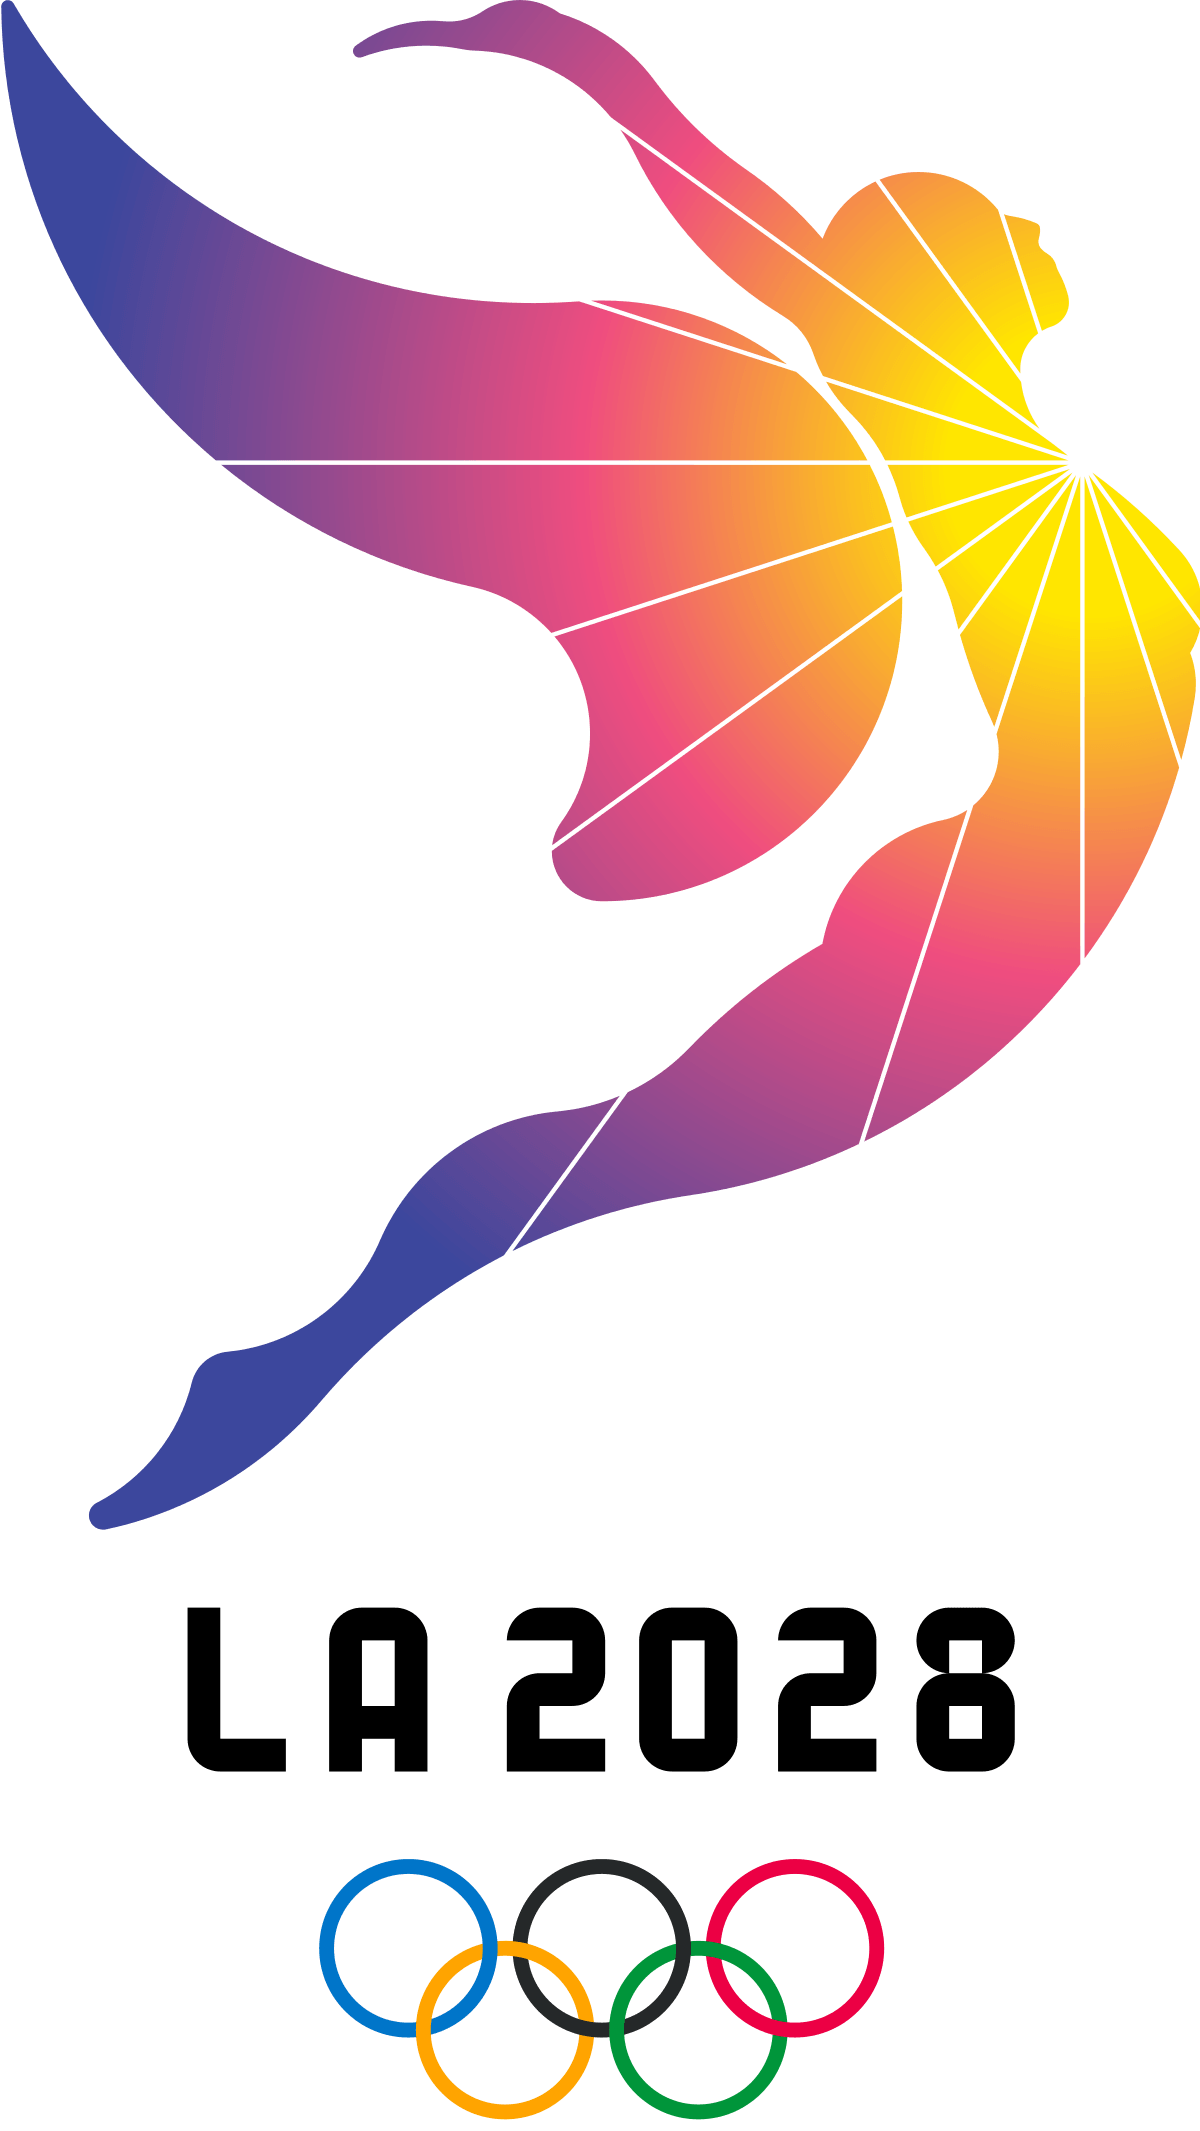 Olimpycs Logo - 2028 Summer Olympics